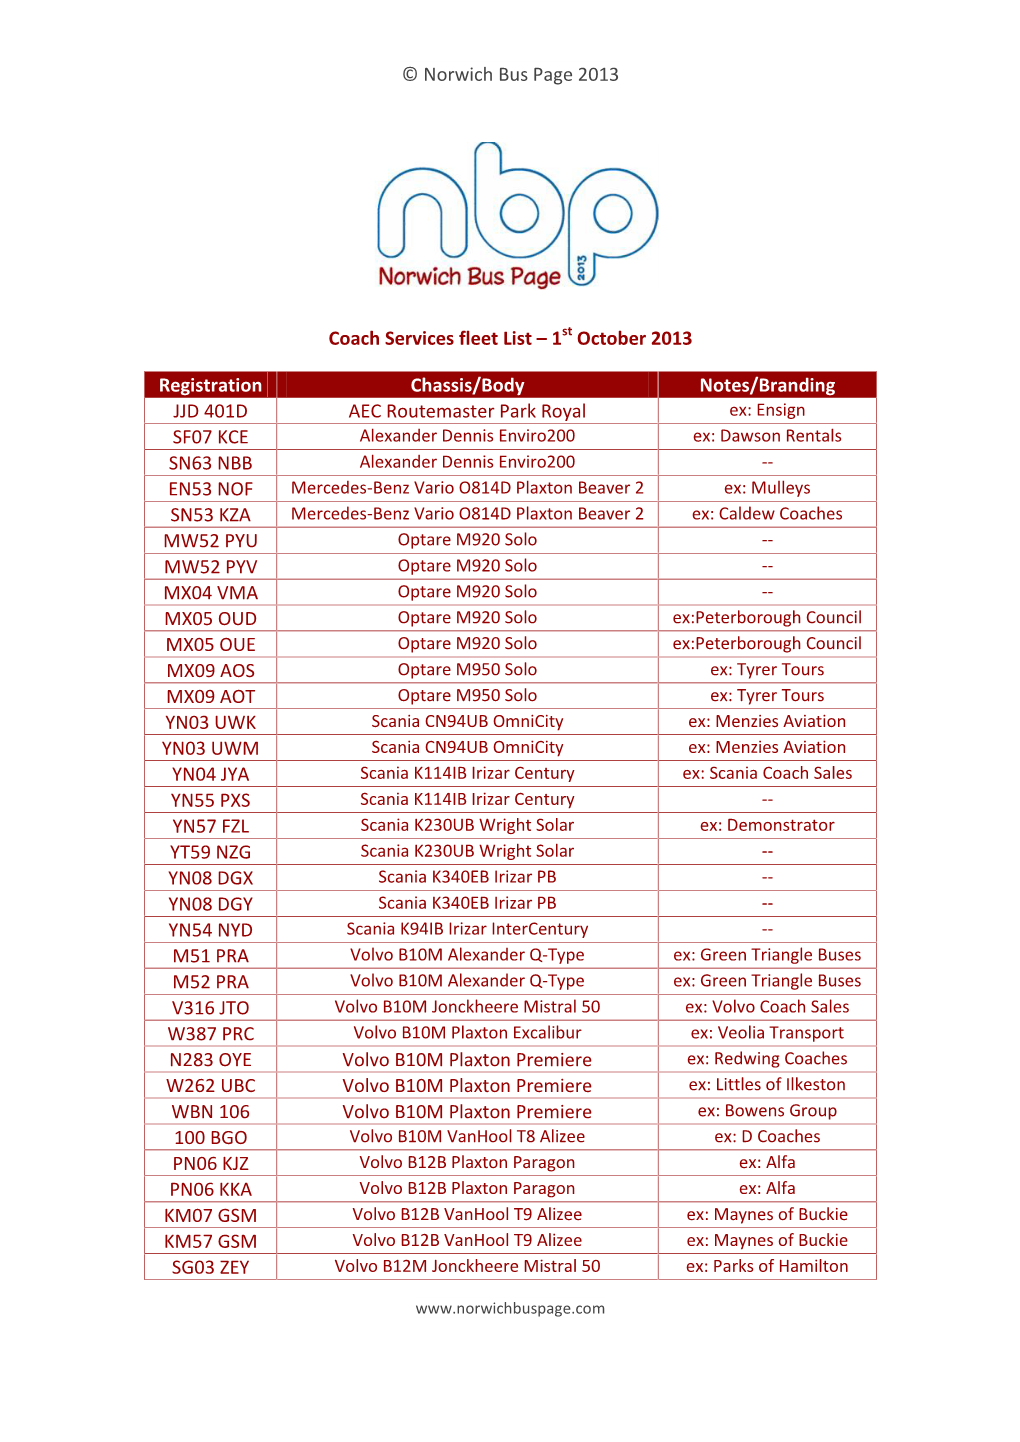 © Norwich Bus Page 2013 Coach Services Fleet List – 1 St October